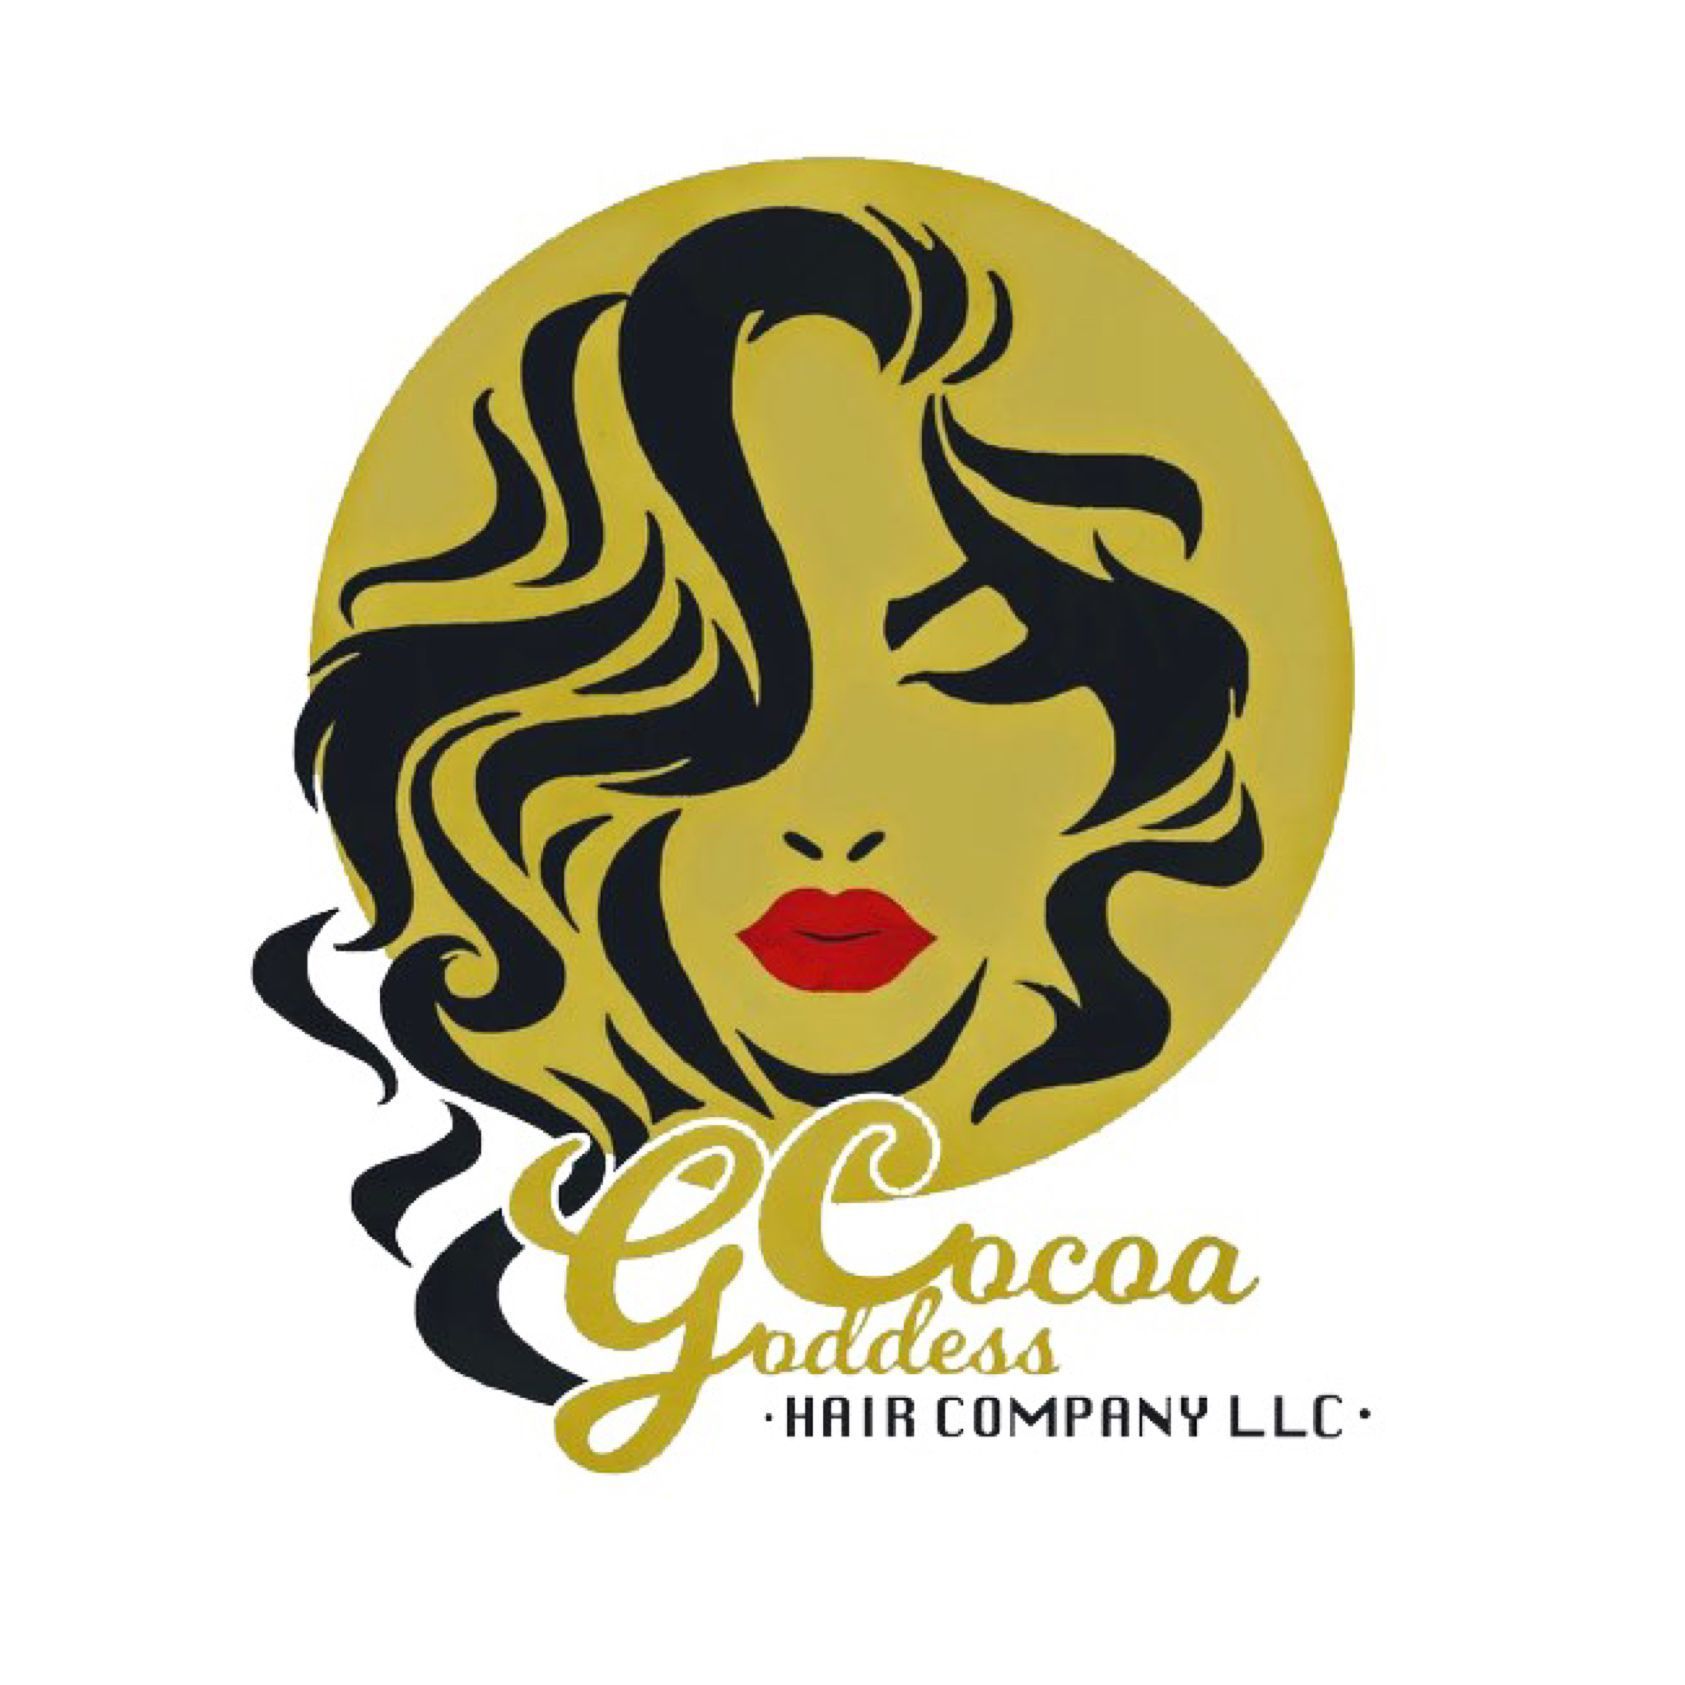 Cocoa Goddess Hair Company LLC, N High School Rd & W 56th St, Indianapolis, 46254